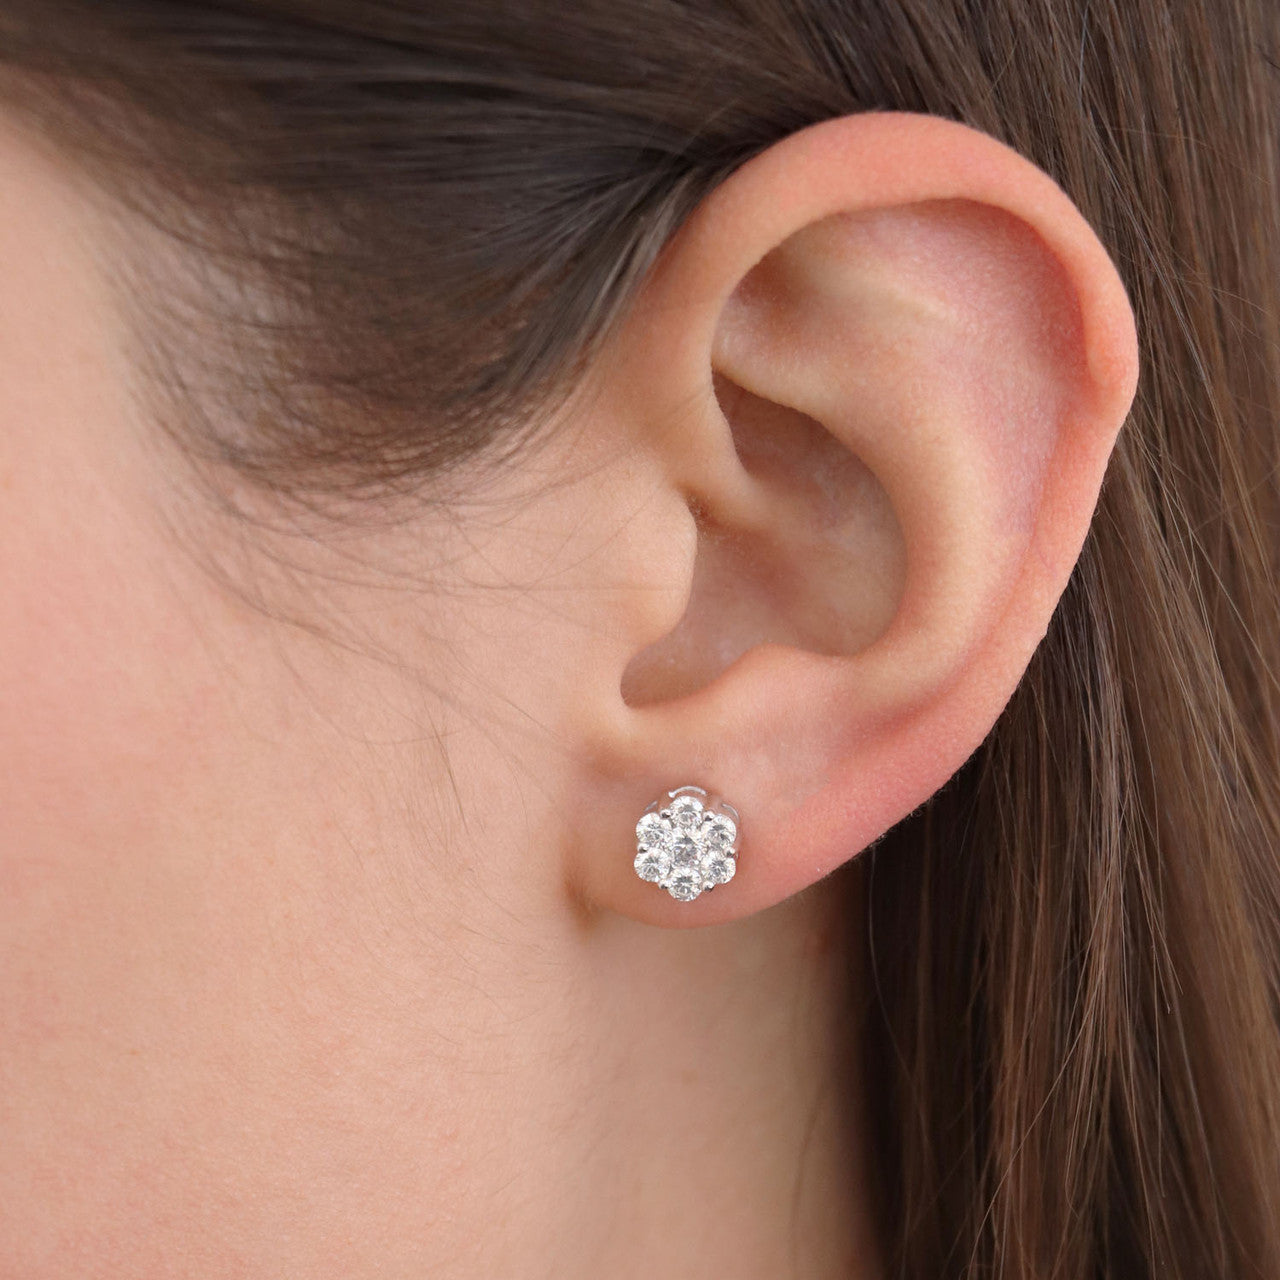 Ice Jewellery Cluster Stud Diamond Earrings with 1.00ct Diamonds in 9K White Gold - RJ9WECLUS100GH | Ice Jewellery Australia